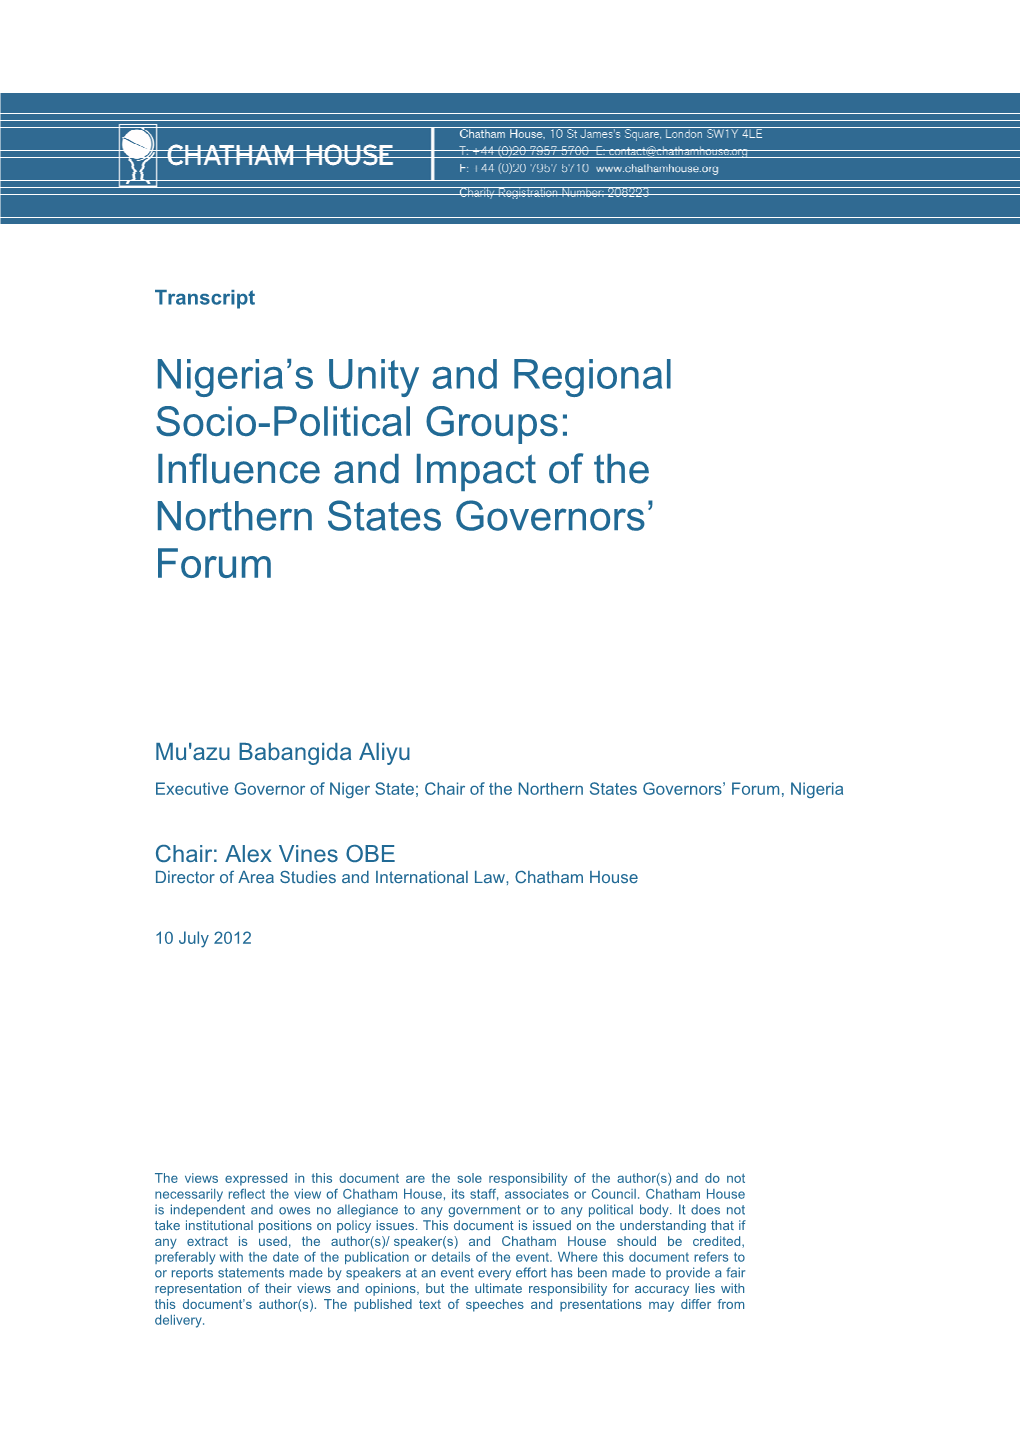 Nigeria's Unity and Regional Socio-Political Groups: Influence